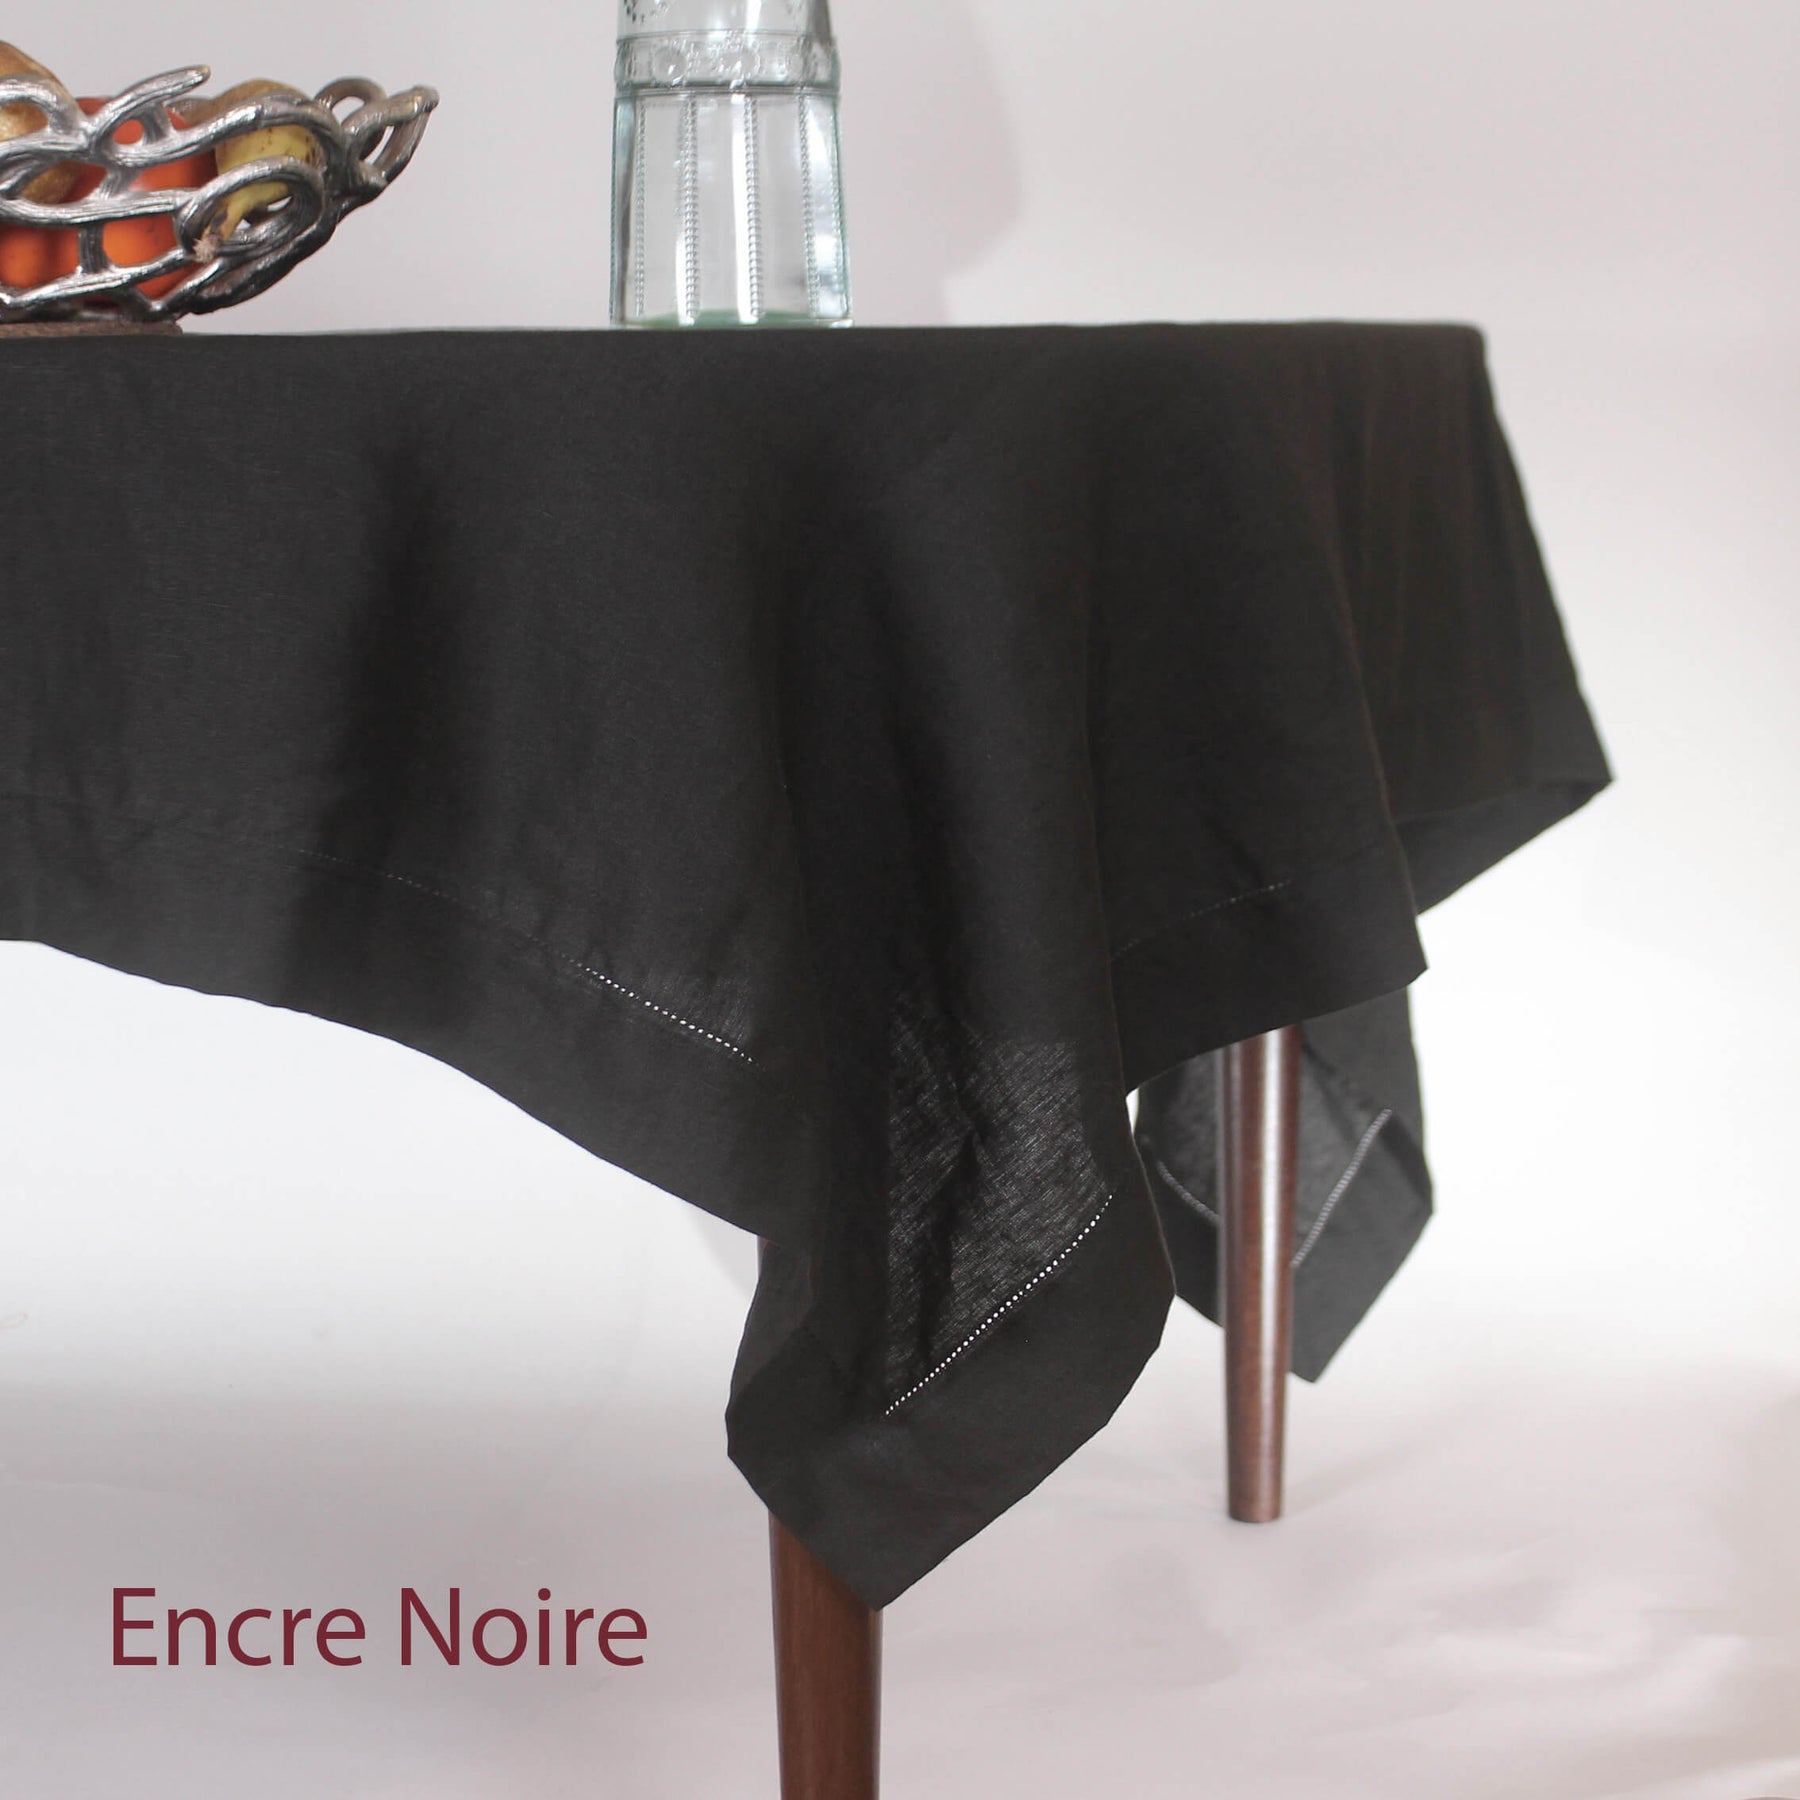 60x 84 Fabric Tablecloth - Jet Black